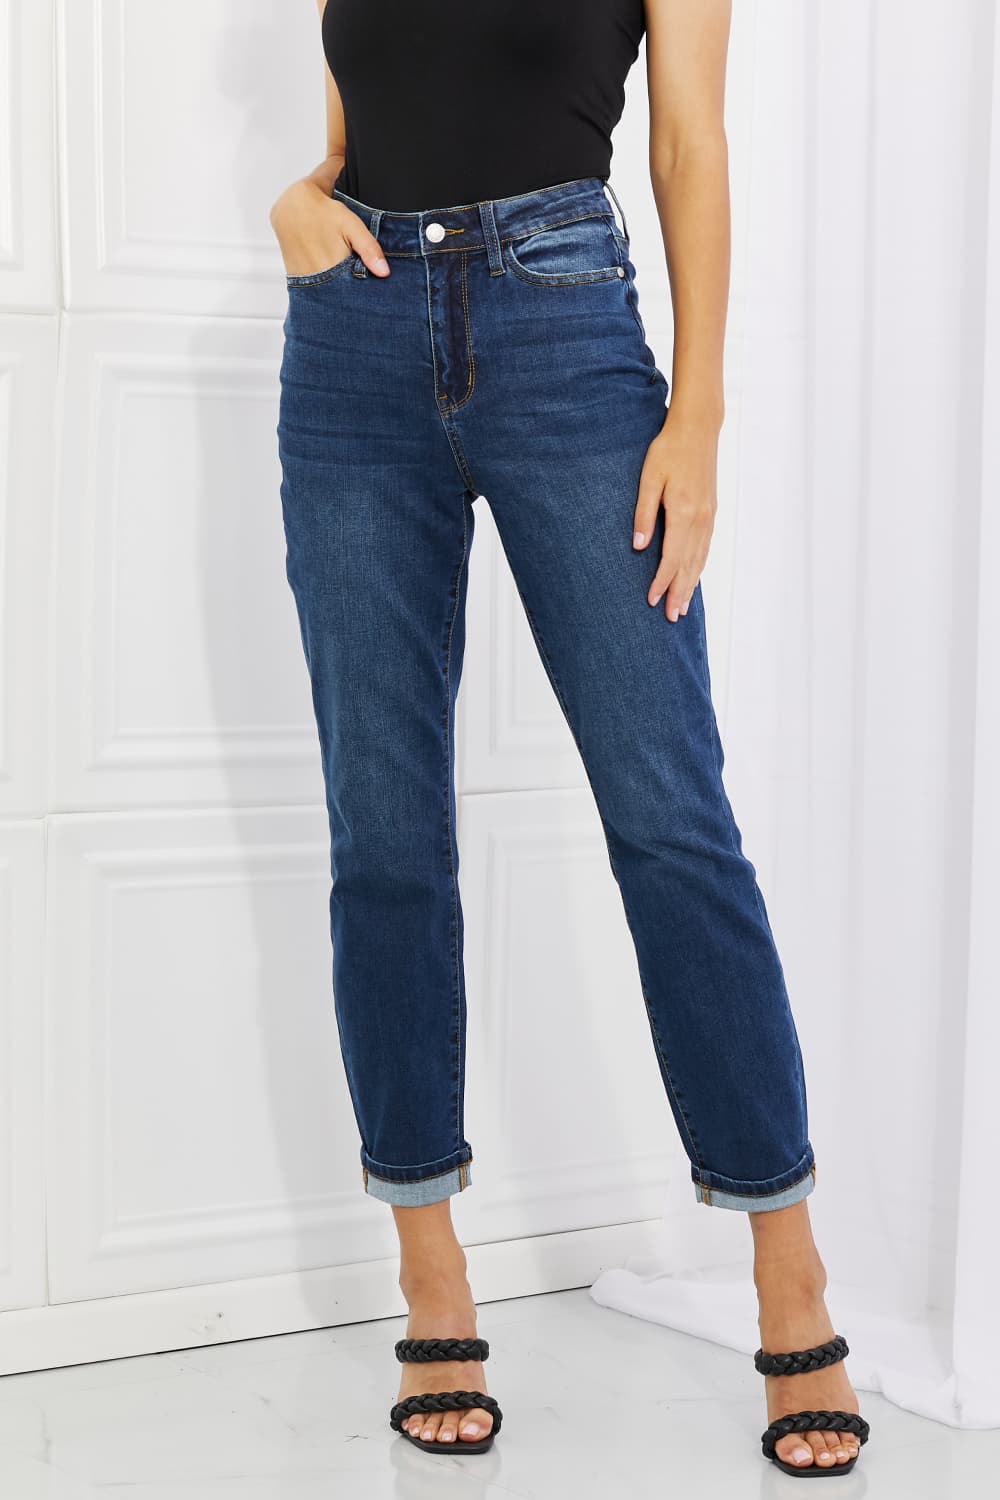 Judy Blue Crystal Full Size High Waisted Cuffed Boyfriend Jeans  Krazy Heart Designs Boutique Dark 0(24) 